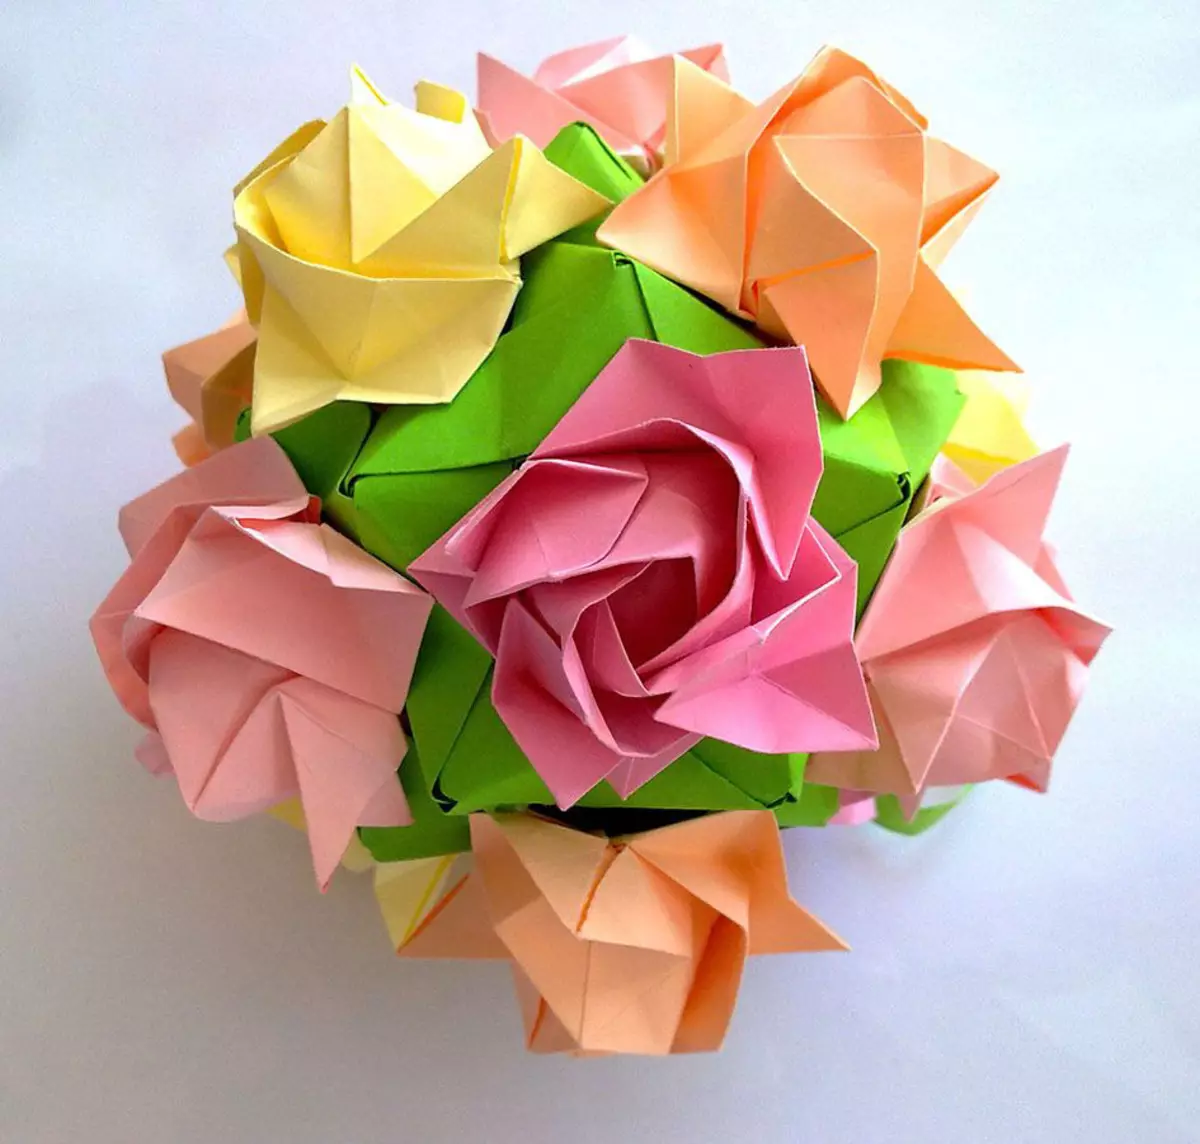 Origami จากกระดาษสำหรับเด็กอายุ 8-9 ปี: โครงร่างแสงแบบทีละขั้นตอนสำหรับเด็กผู้ชายและงานฝีมือสำหรับเด็กผู้หญิงด้วยมือของตัวเองความคิดที่เรียบง่ายสำหรับผู้เริ่มต้น 27047_4